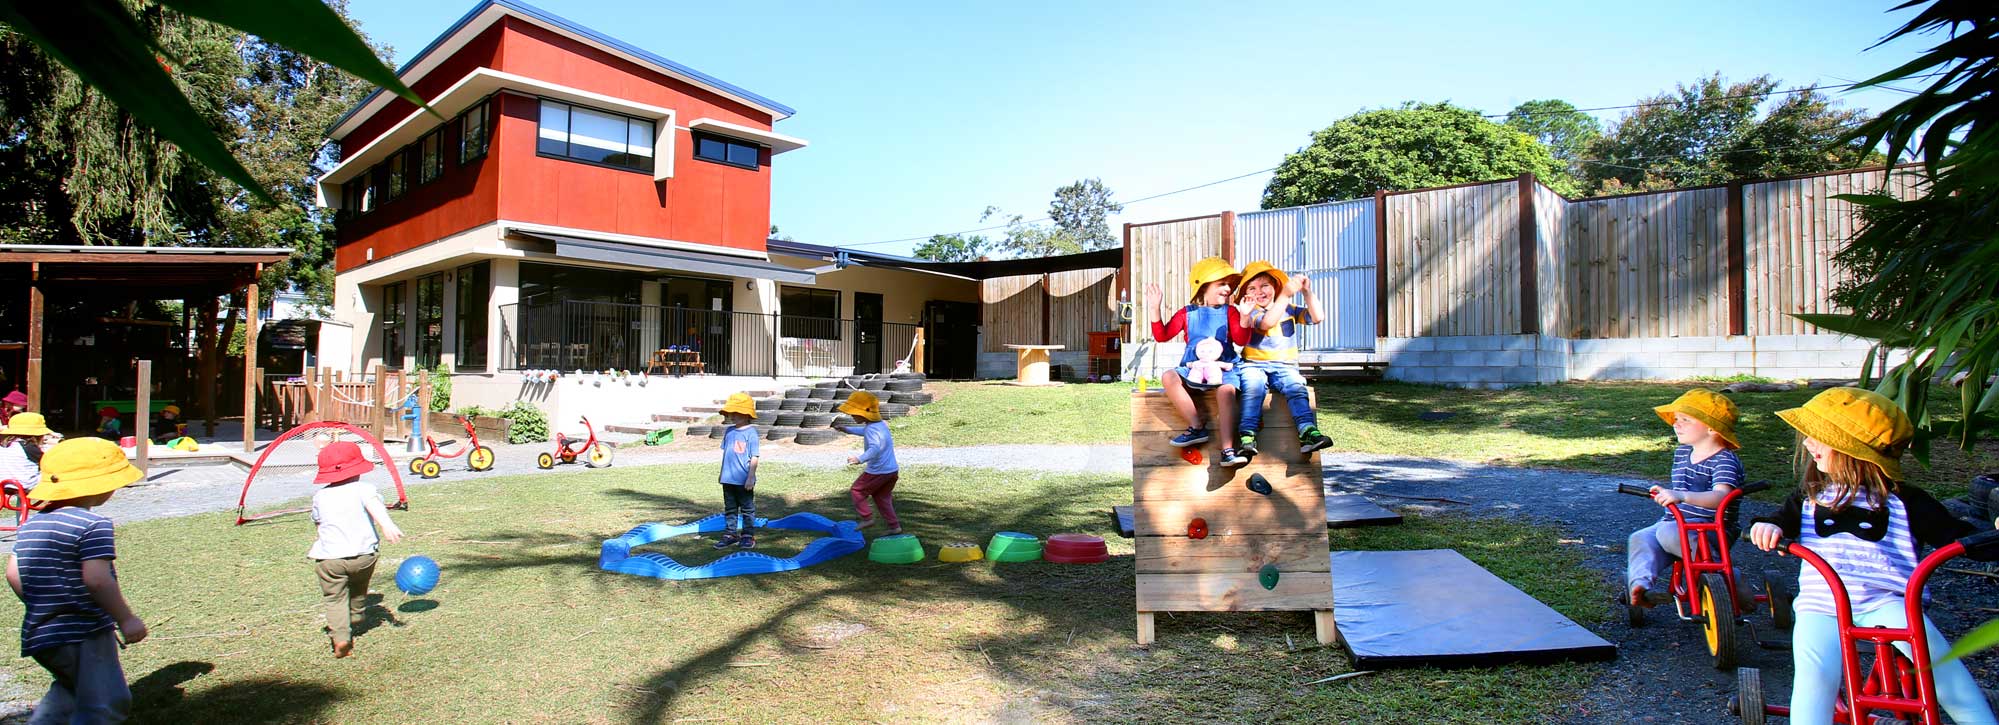 Adeona Mitchelton Childcare Centre Playgrounds